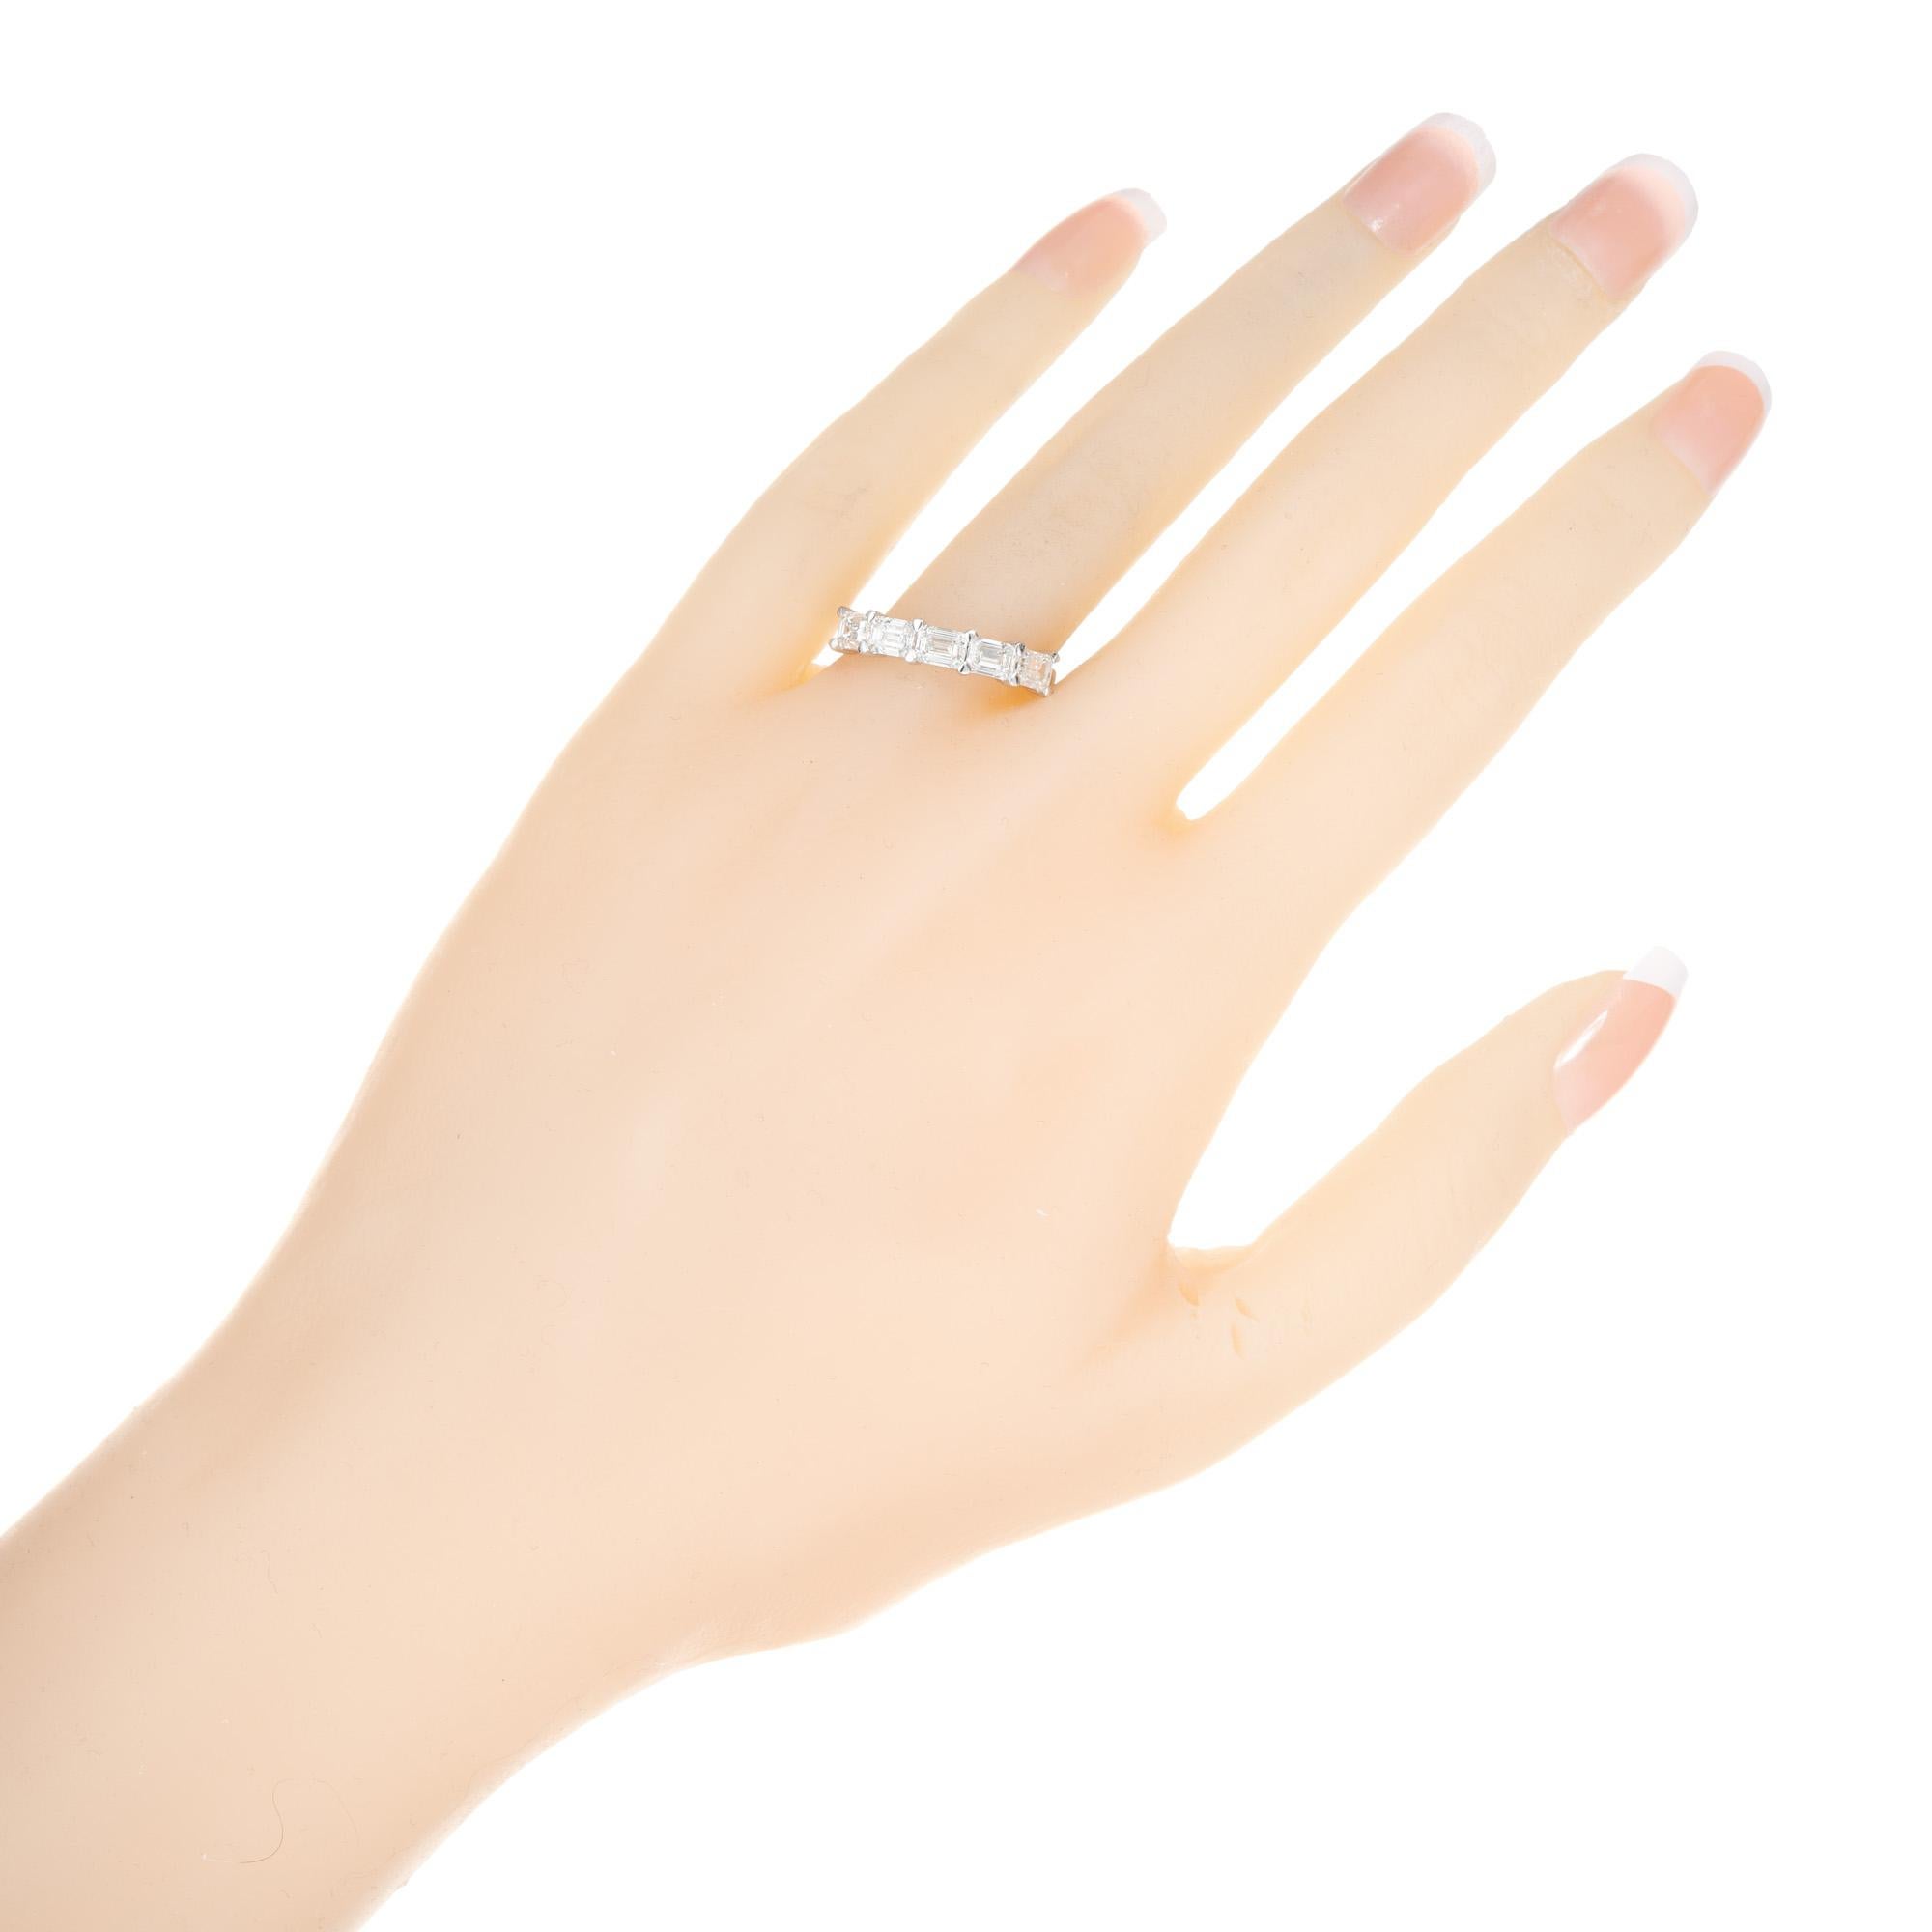 Peter Suchy 1.55 Carat Emerald Cut Diamond Platinum Wedding Band Ring For Sale 3